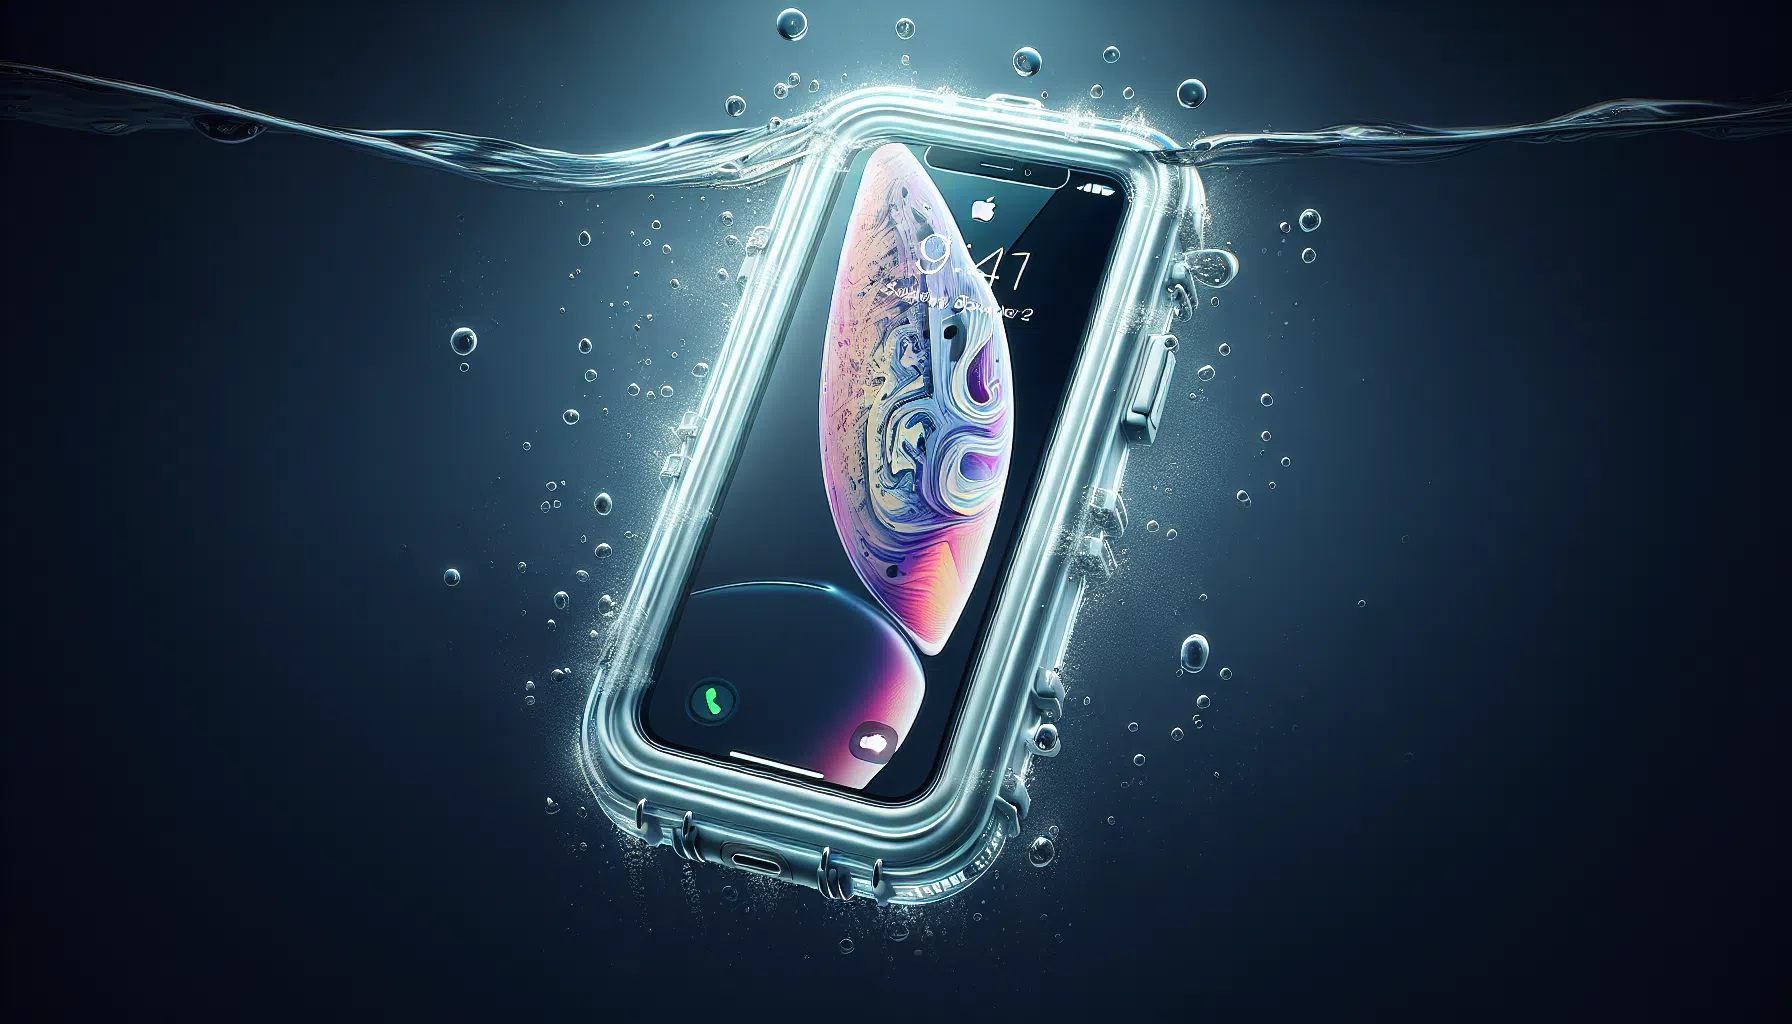 iPhone in a waterproof case